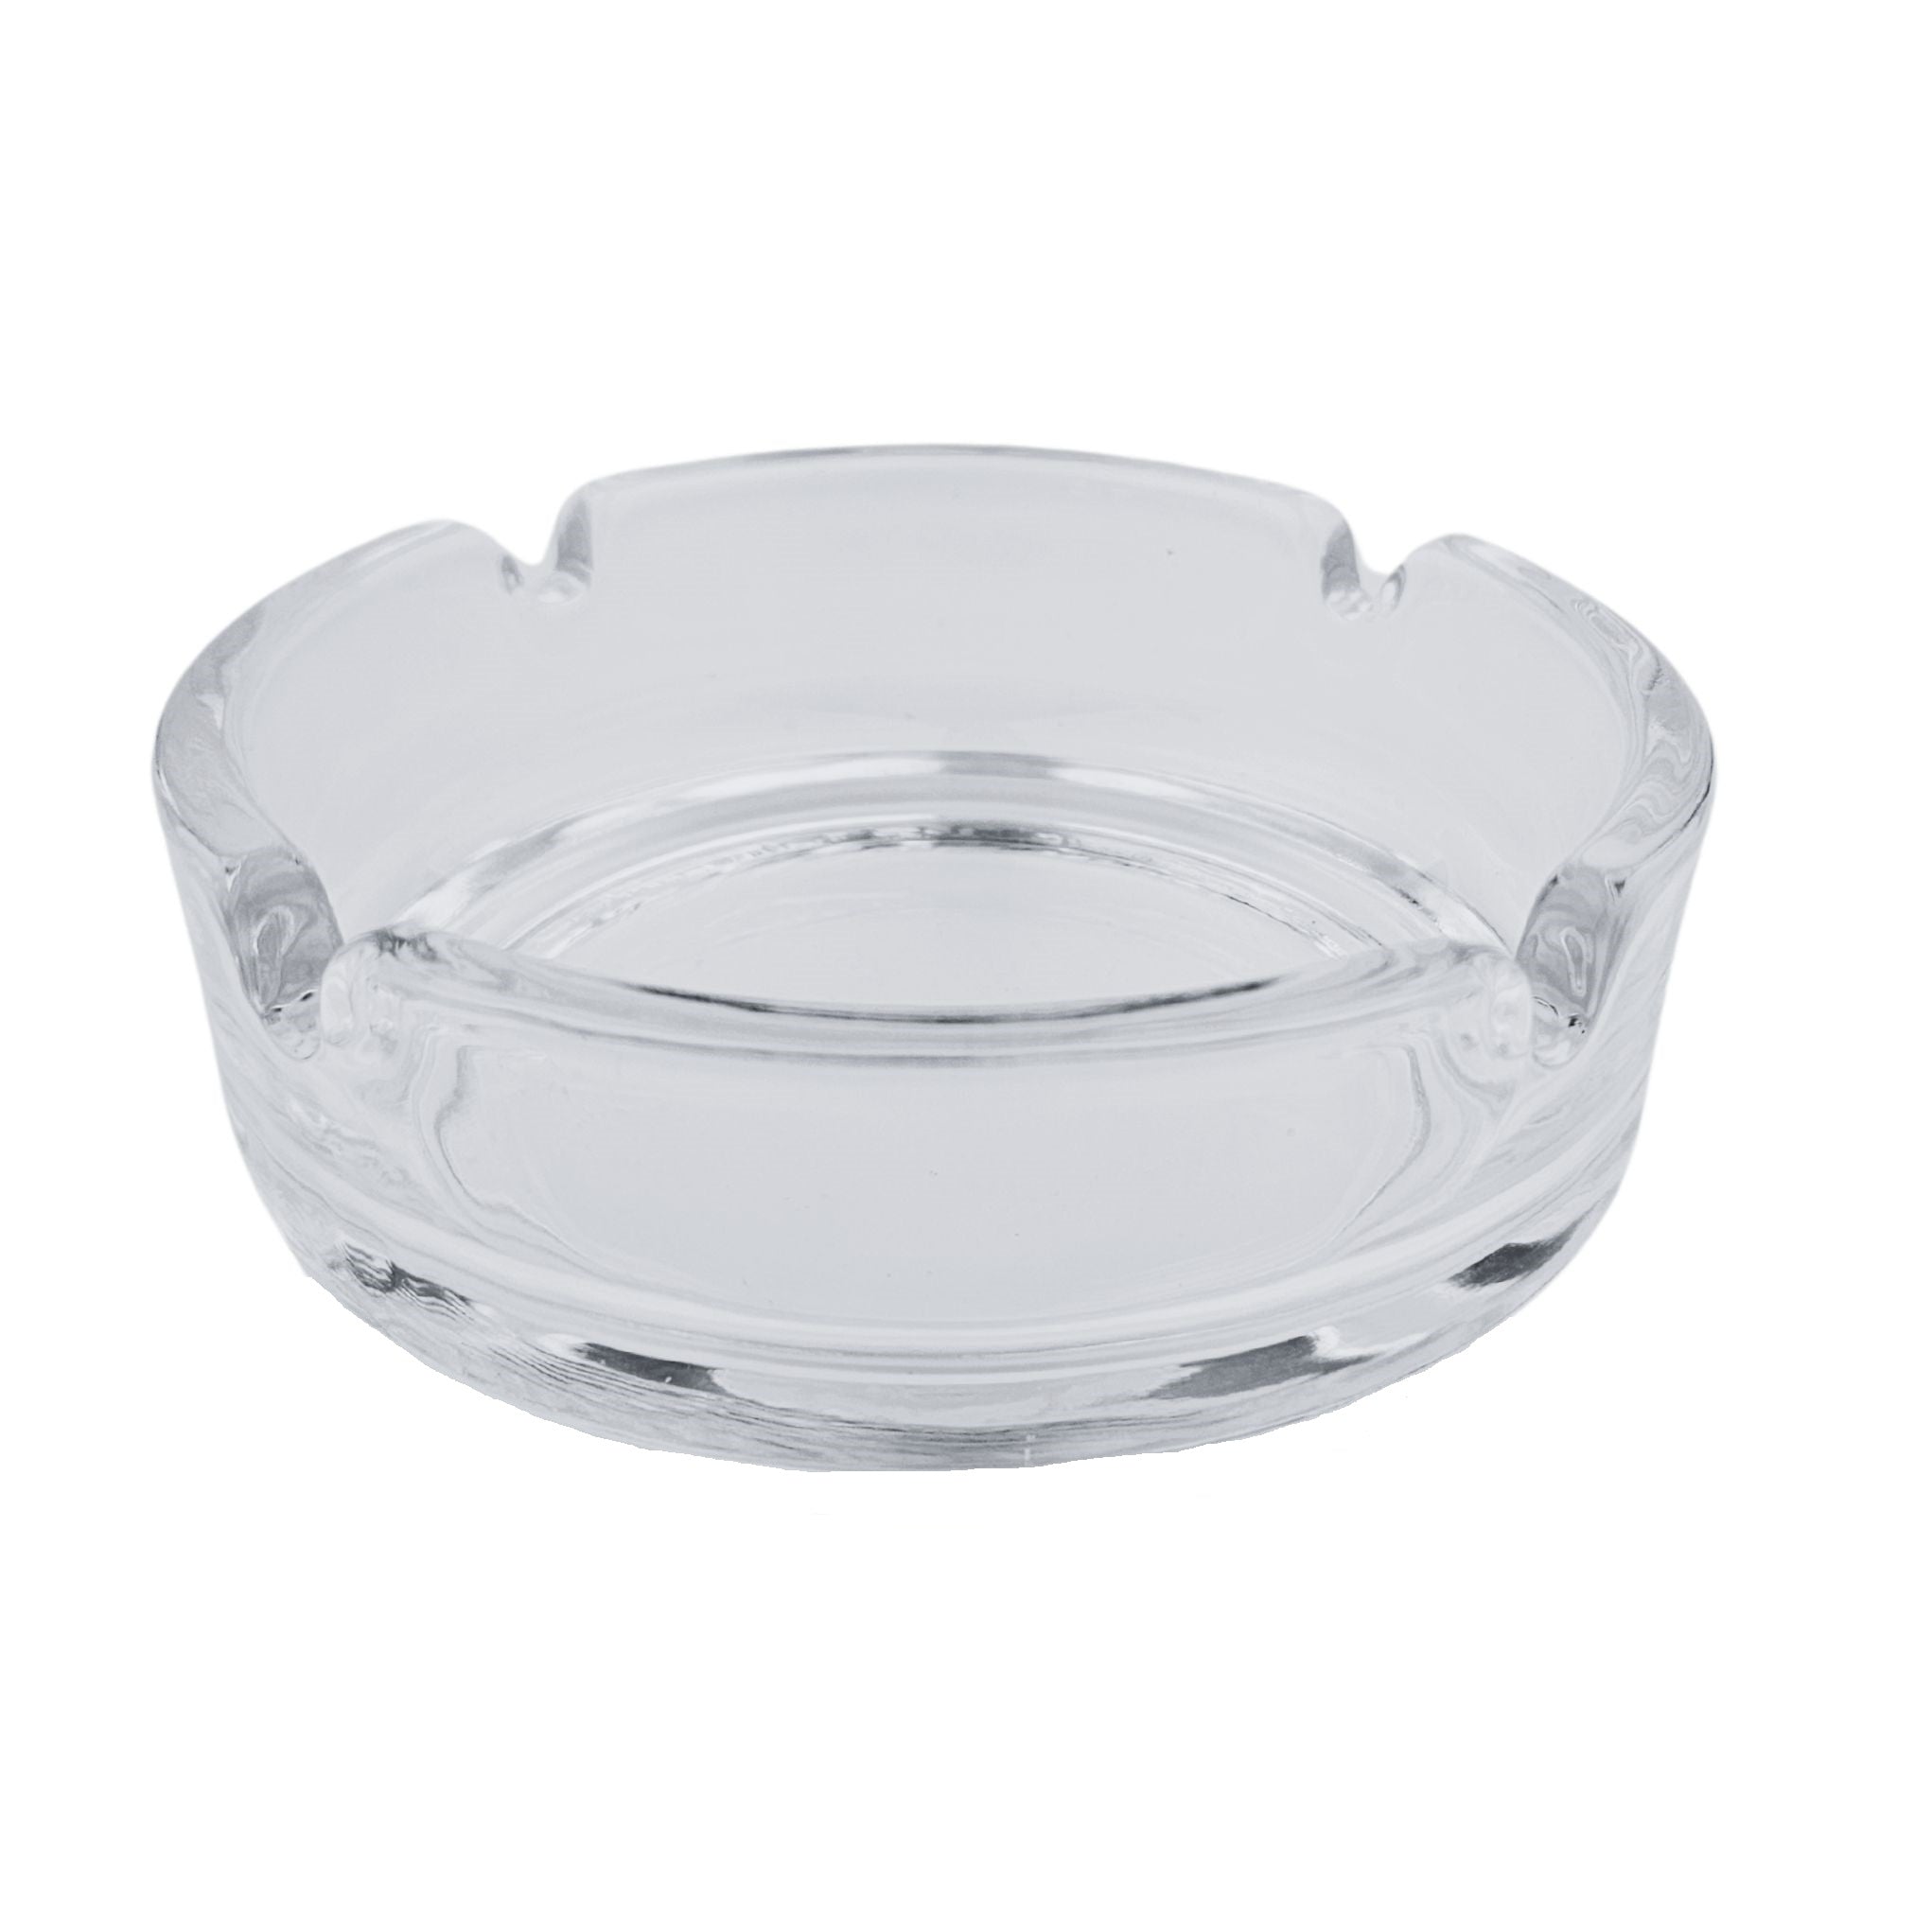 Transparent glass ashtray